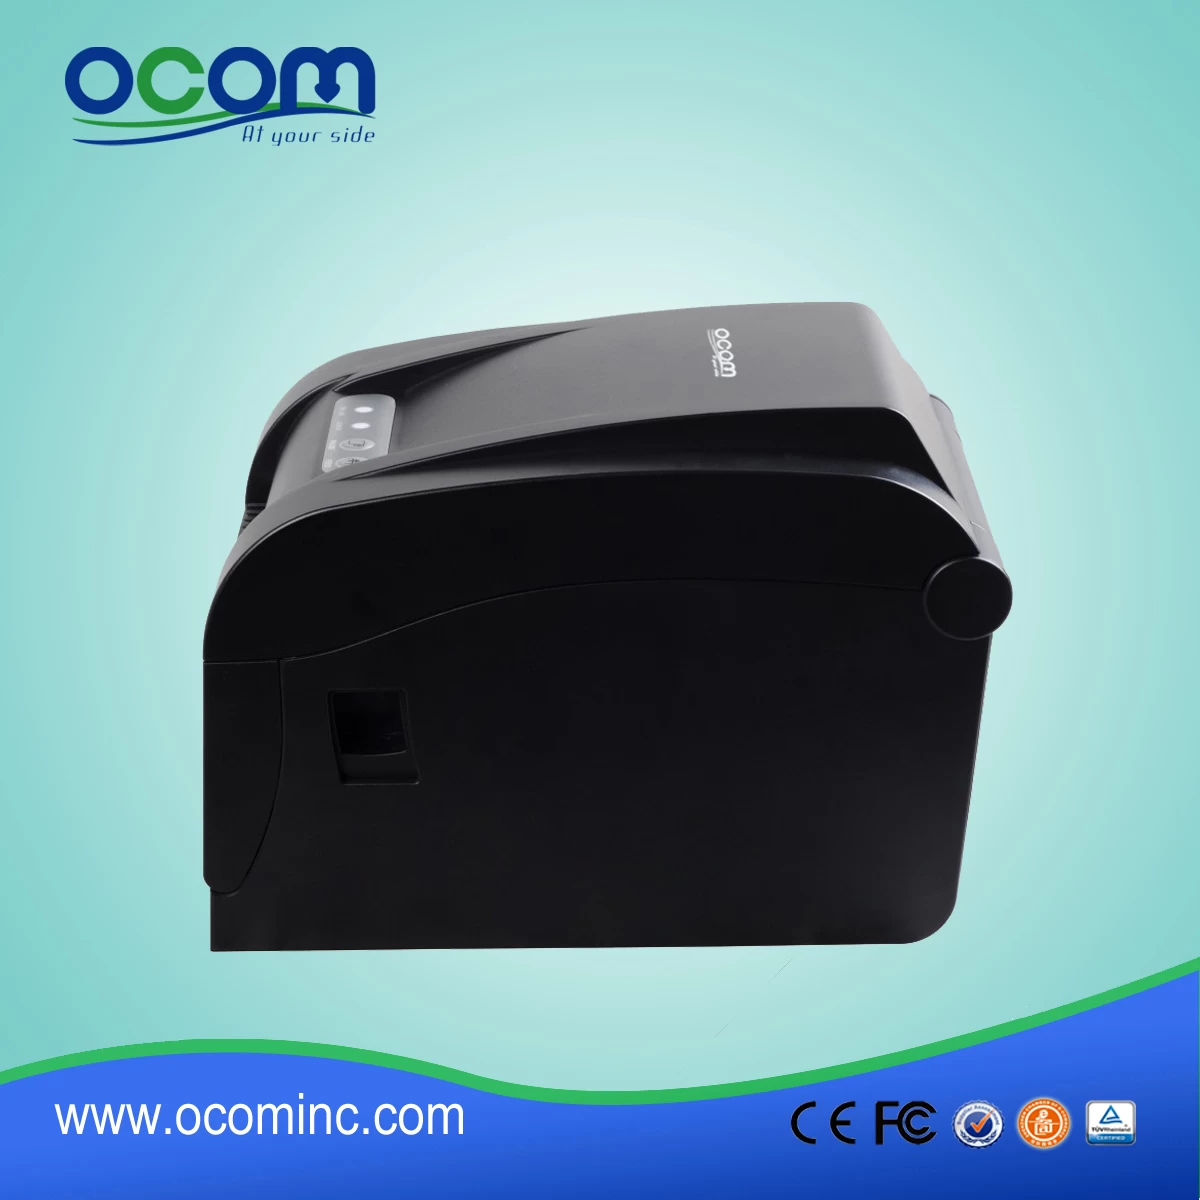 barcode thermal printers China (OCBP-005)